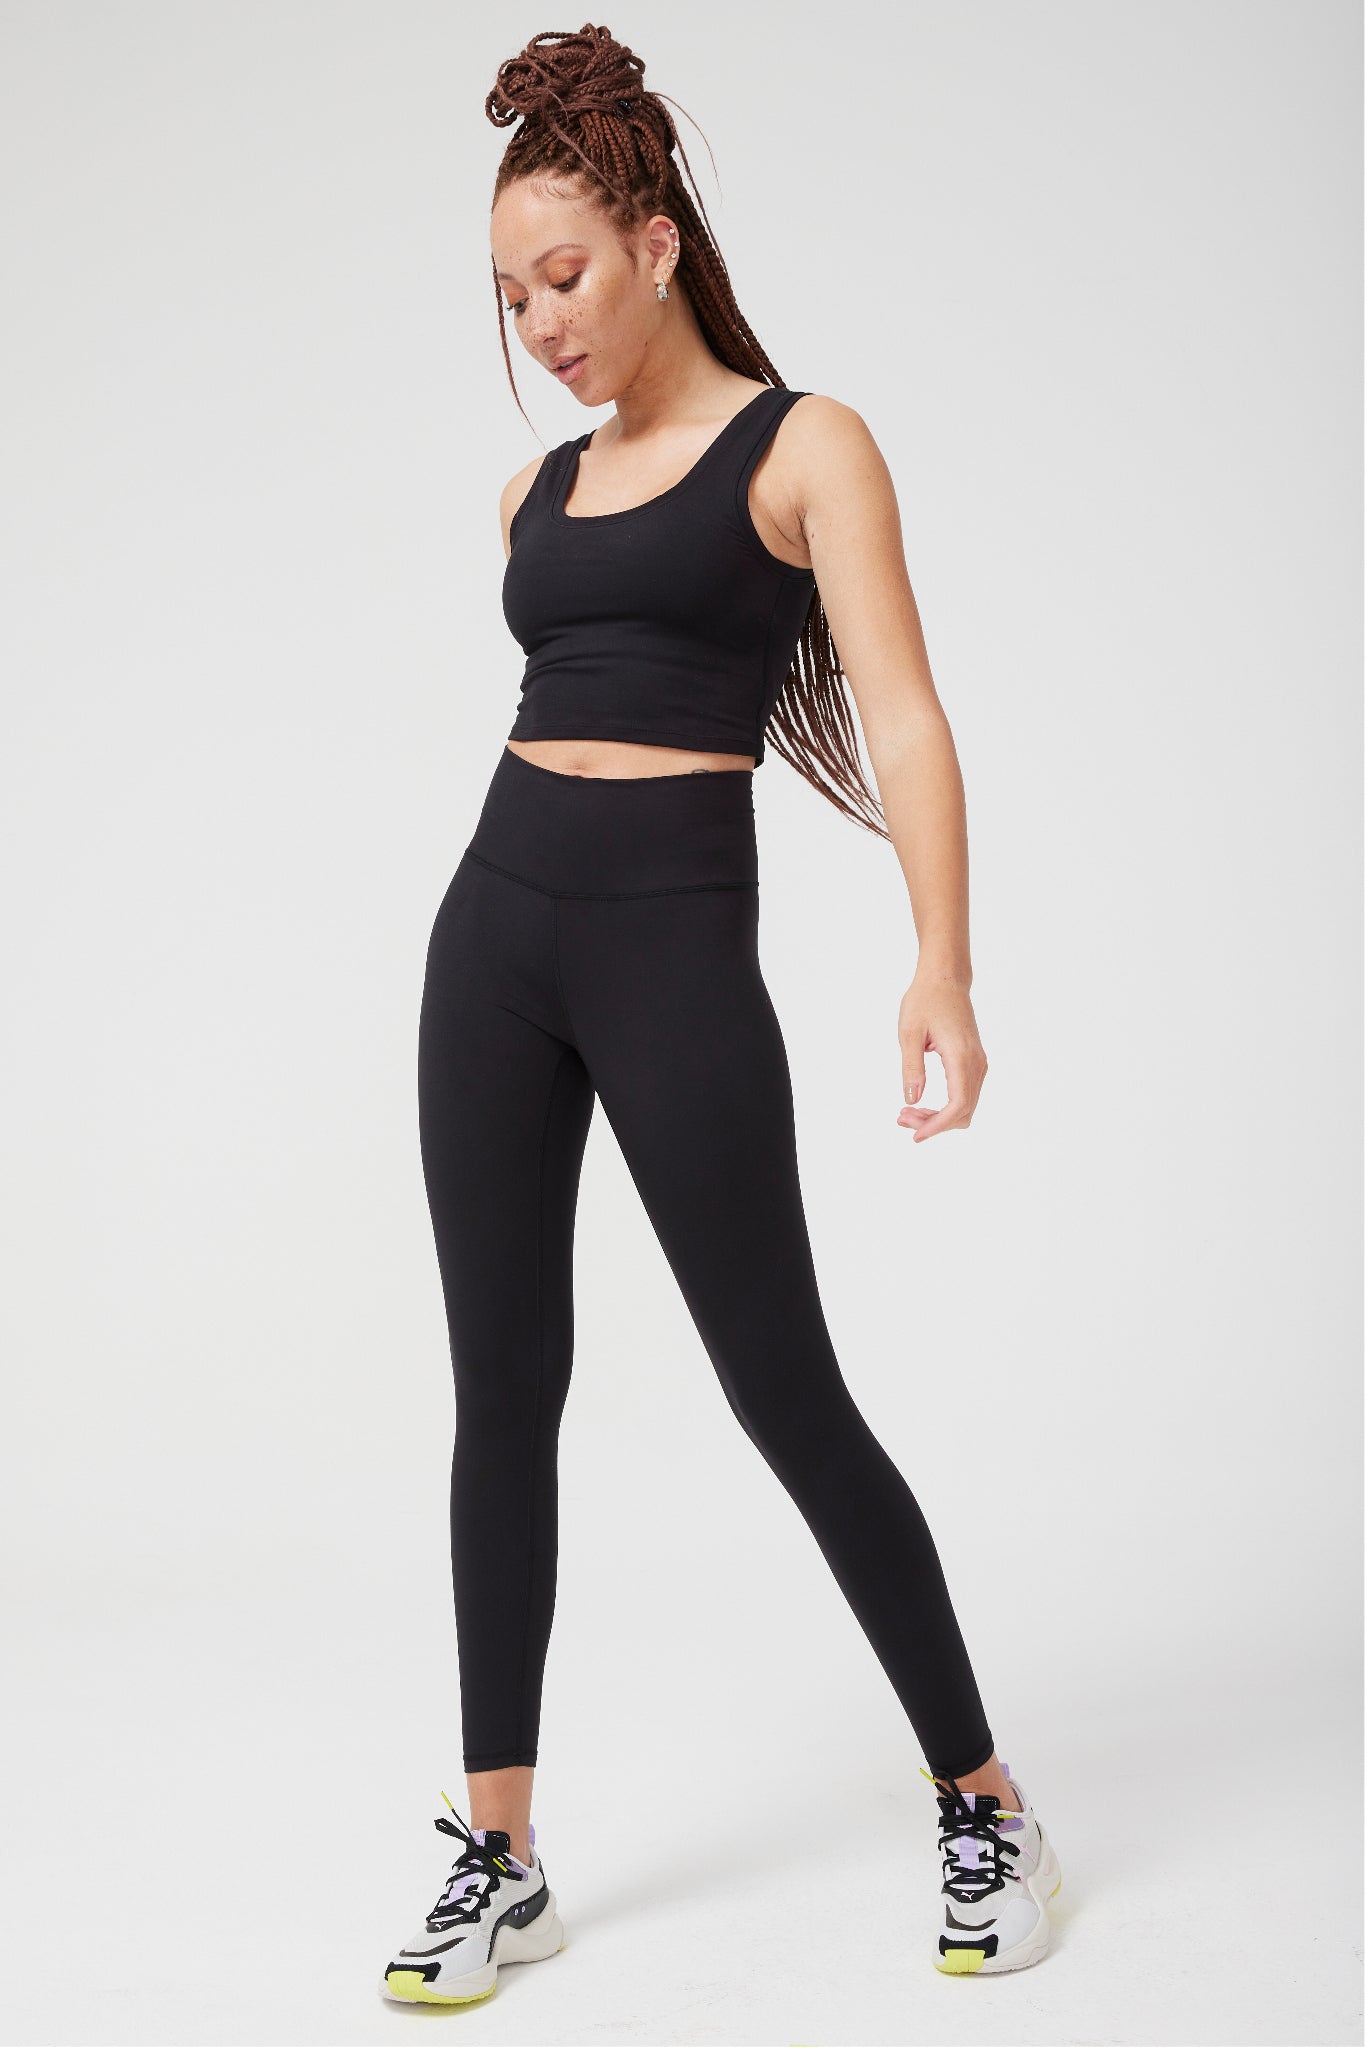 Terez Womens Yoga Fitness Athletic Leggings Black XXS at  Women's  Clothing store